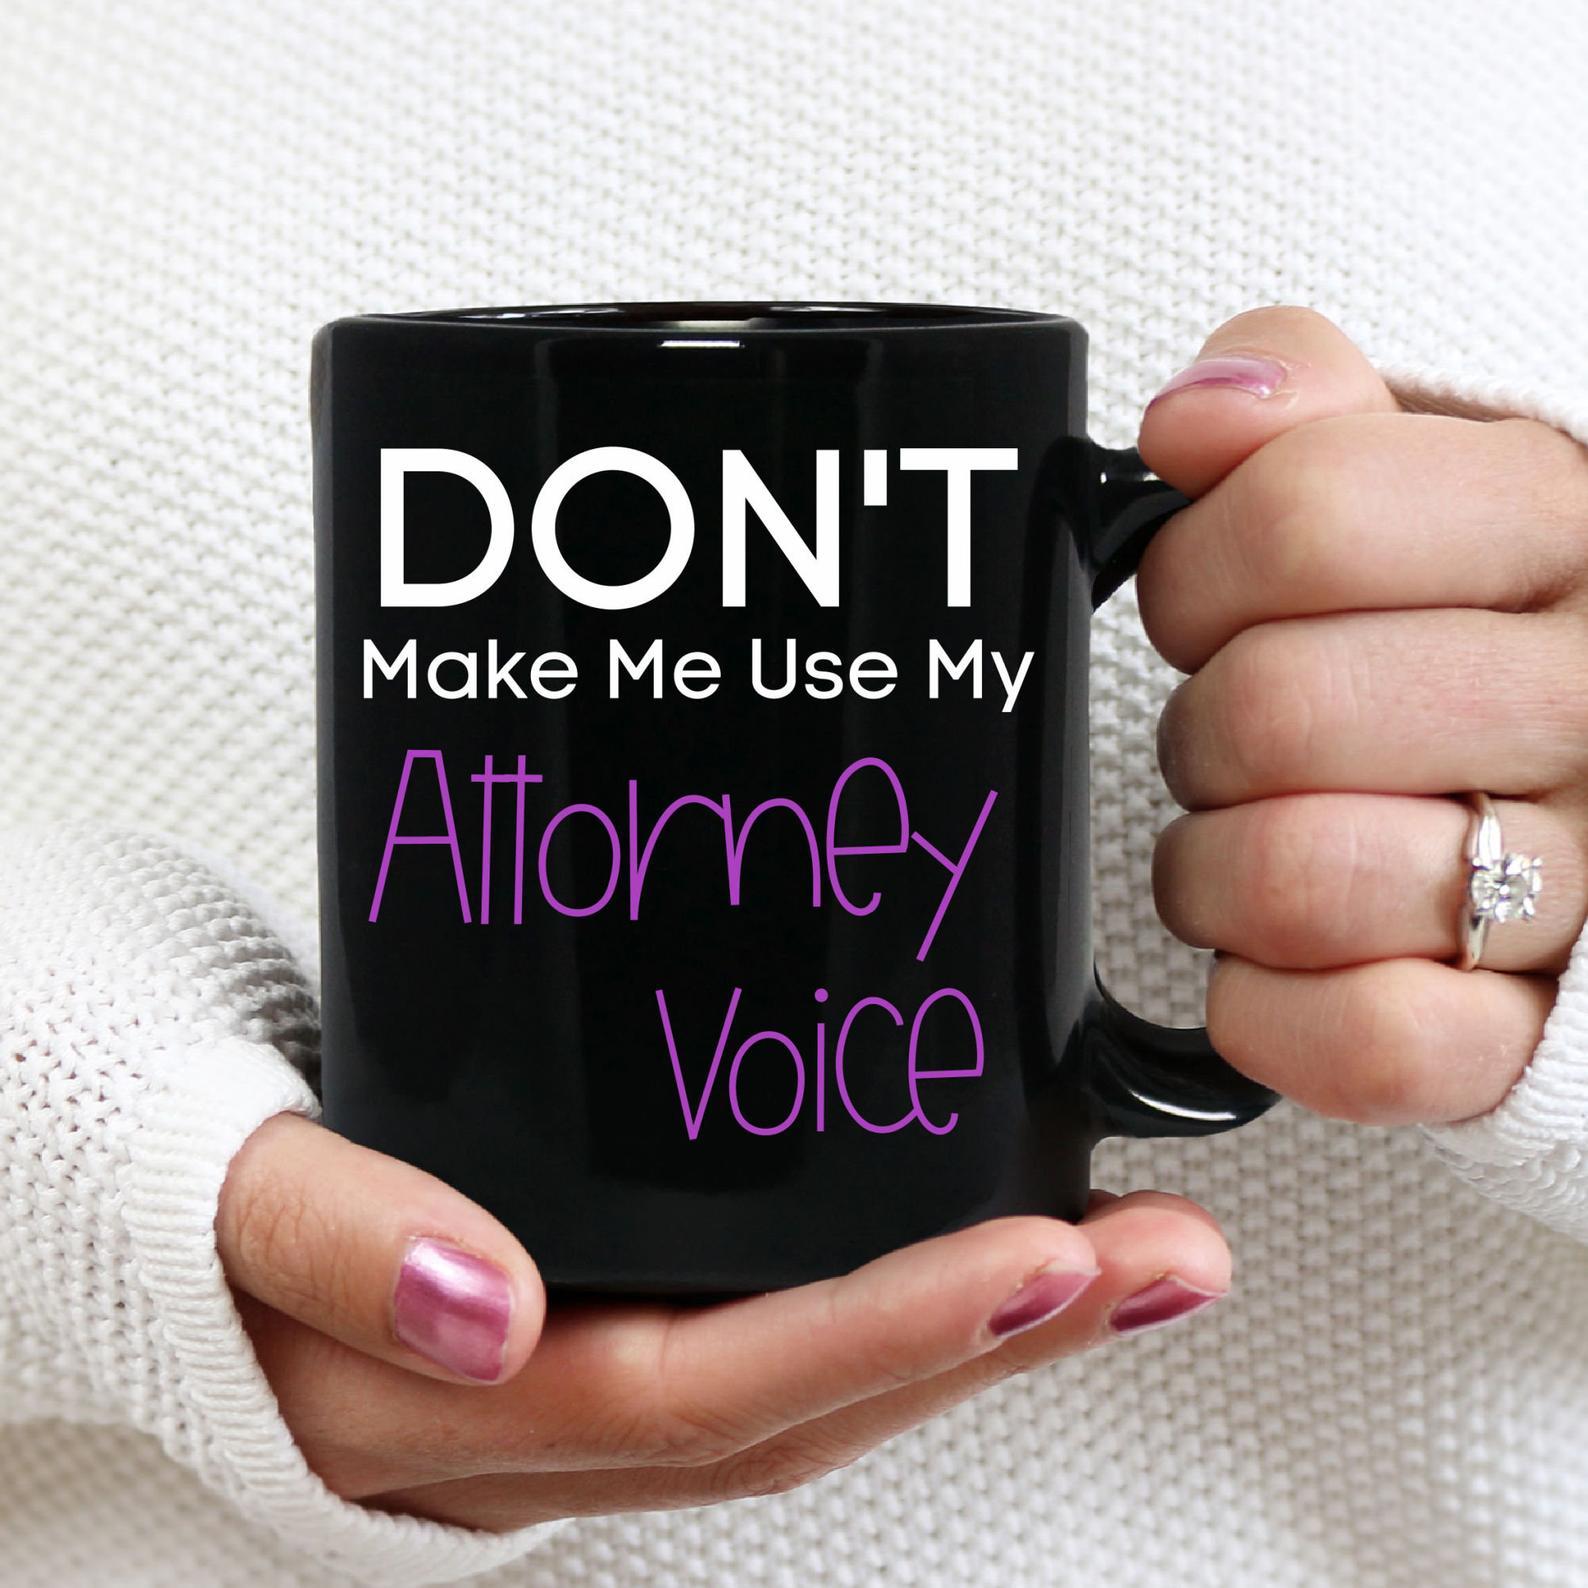 Lawyer Don't Make Me Use My Attorney Voice Lawyer Mug Black Ceramic 11-15oz Coffee Tea Cup